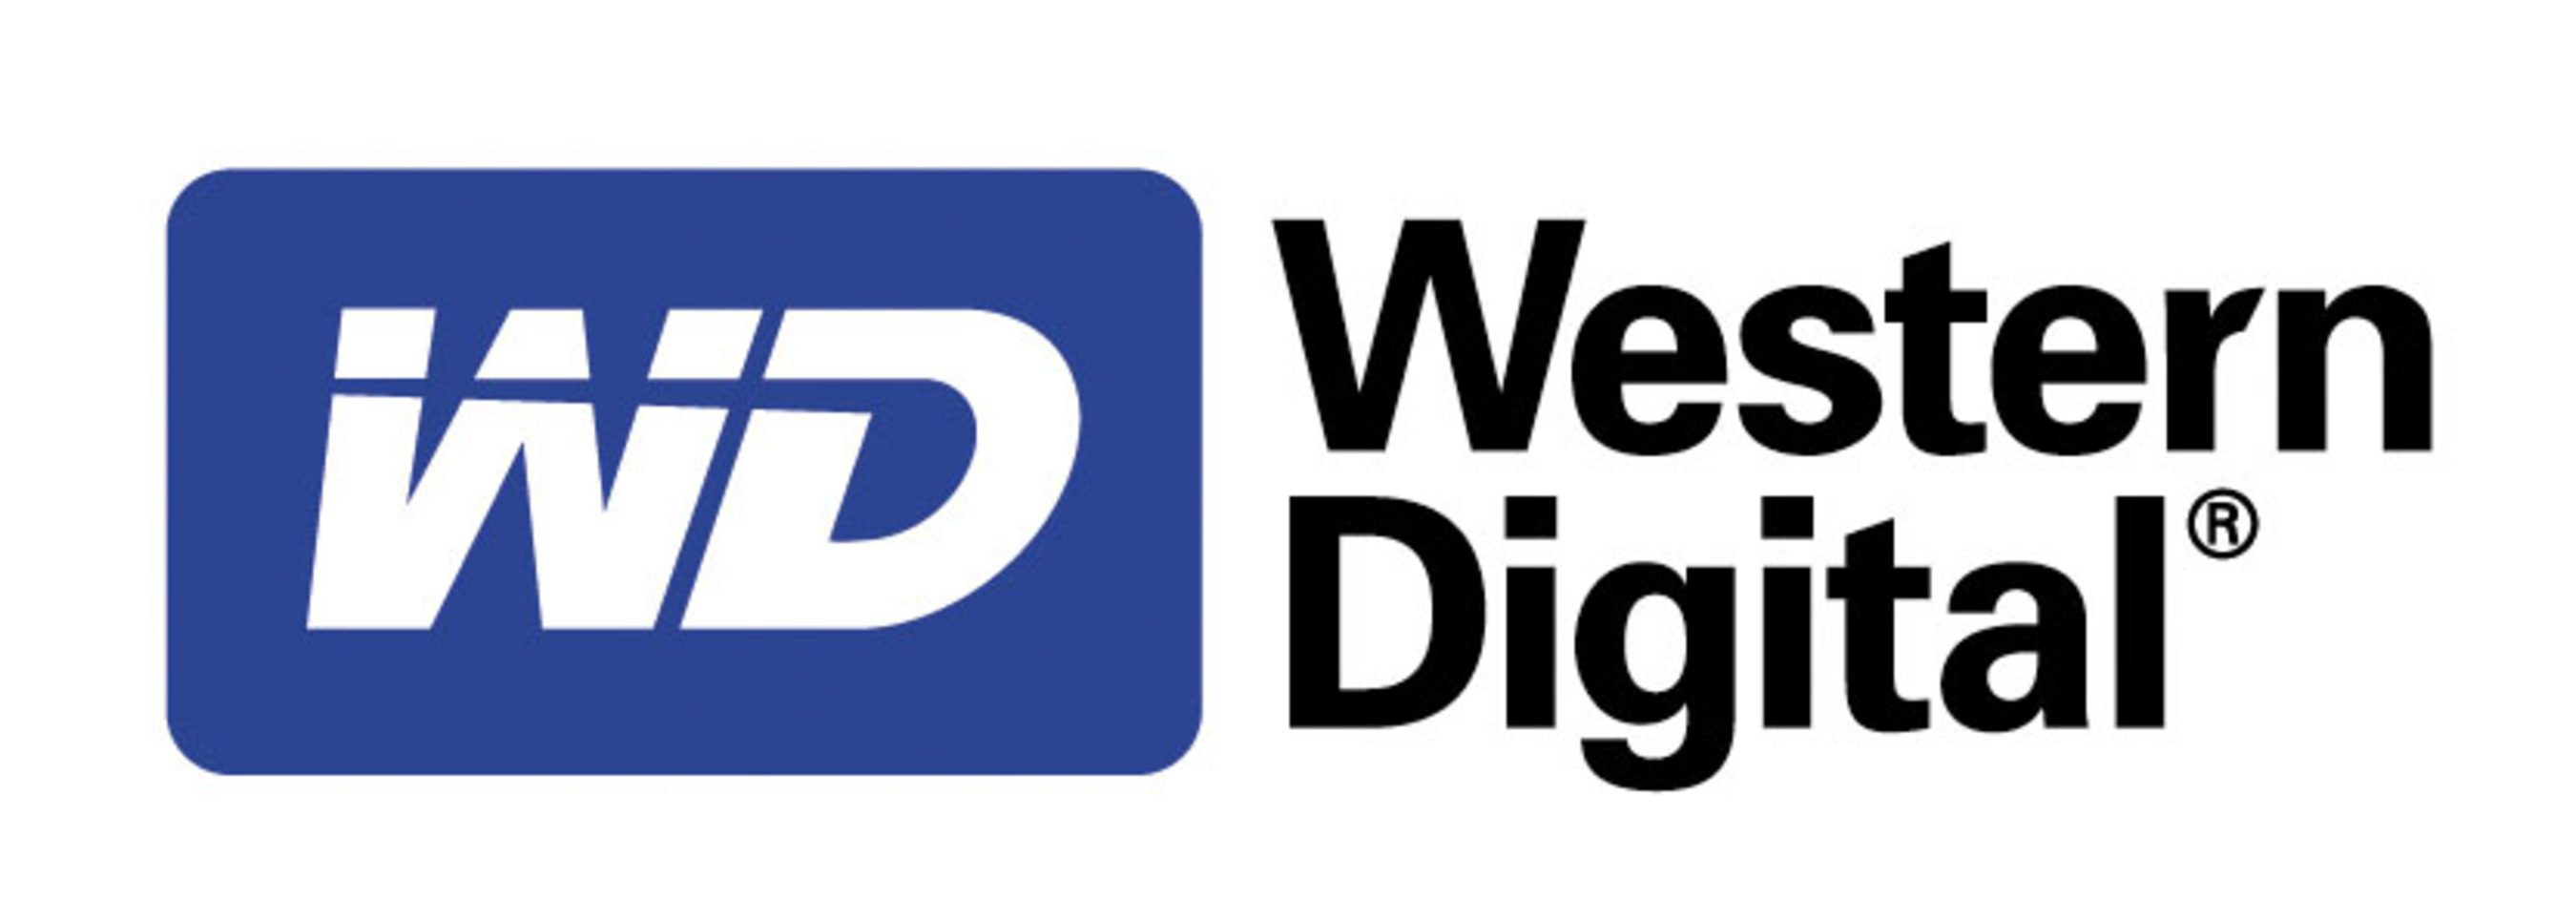 Western Digital Corp. logo. (PRNewsFoto) (PRNewsFoto/)